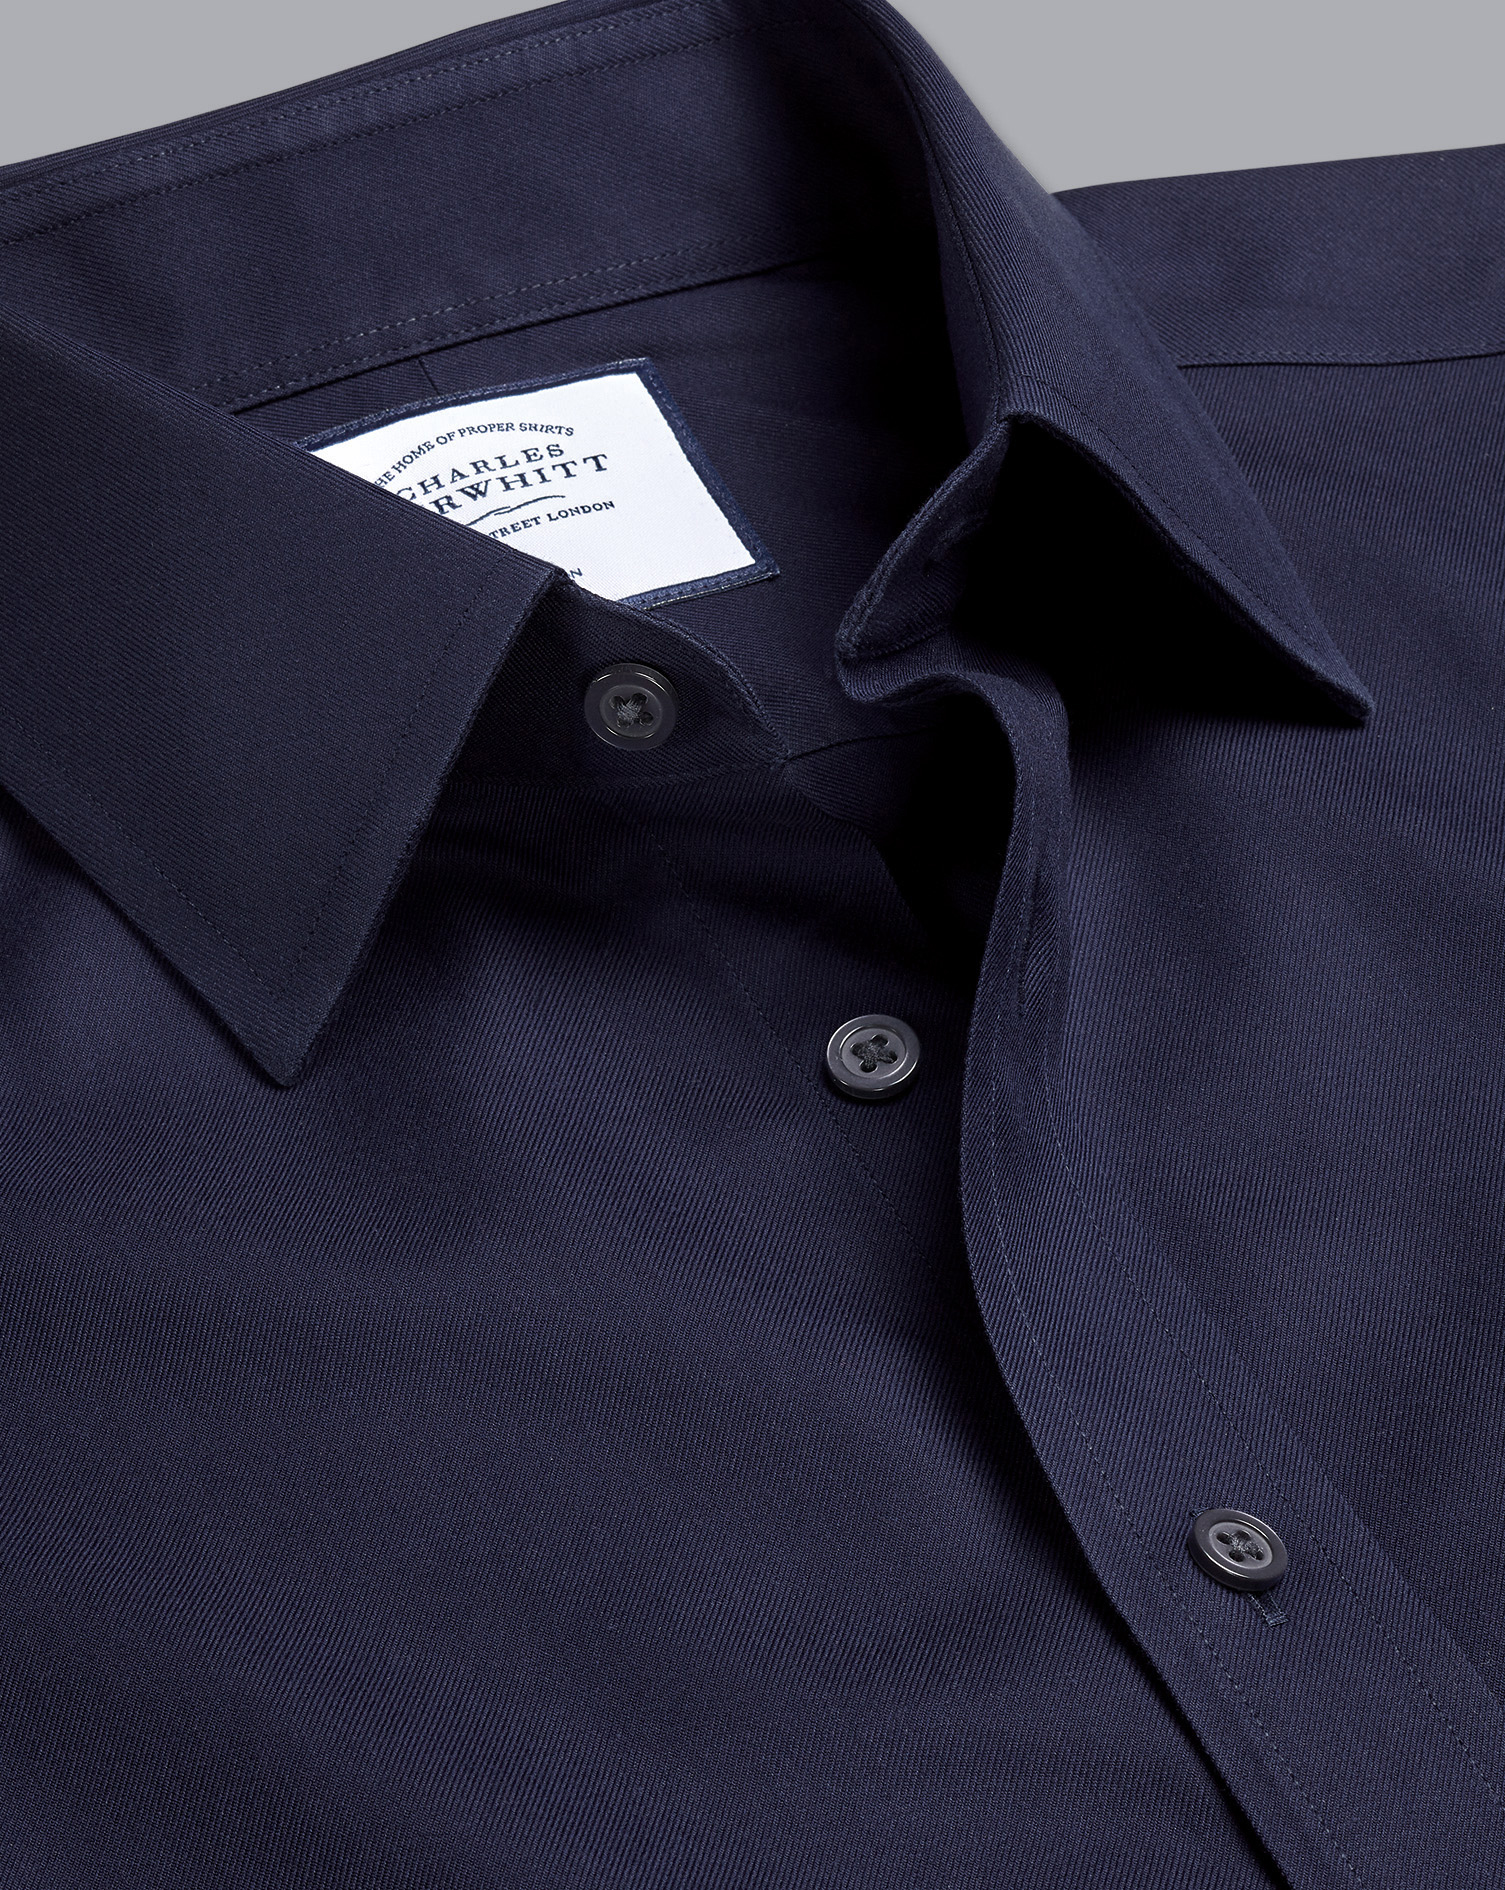 Men's Charles Tyrwhitt Non-Iron Twill Dress Shirt - Navy French Cuff Blue Size XXXL Cotton
